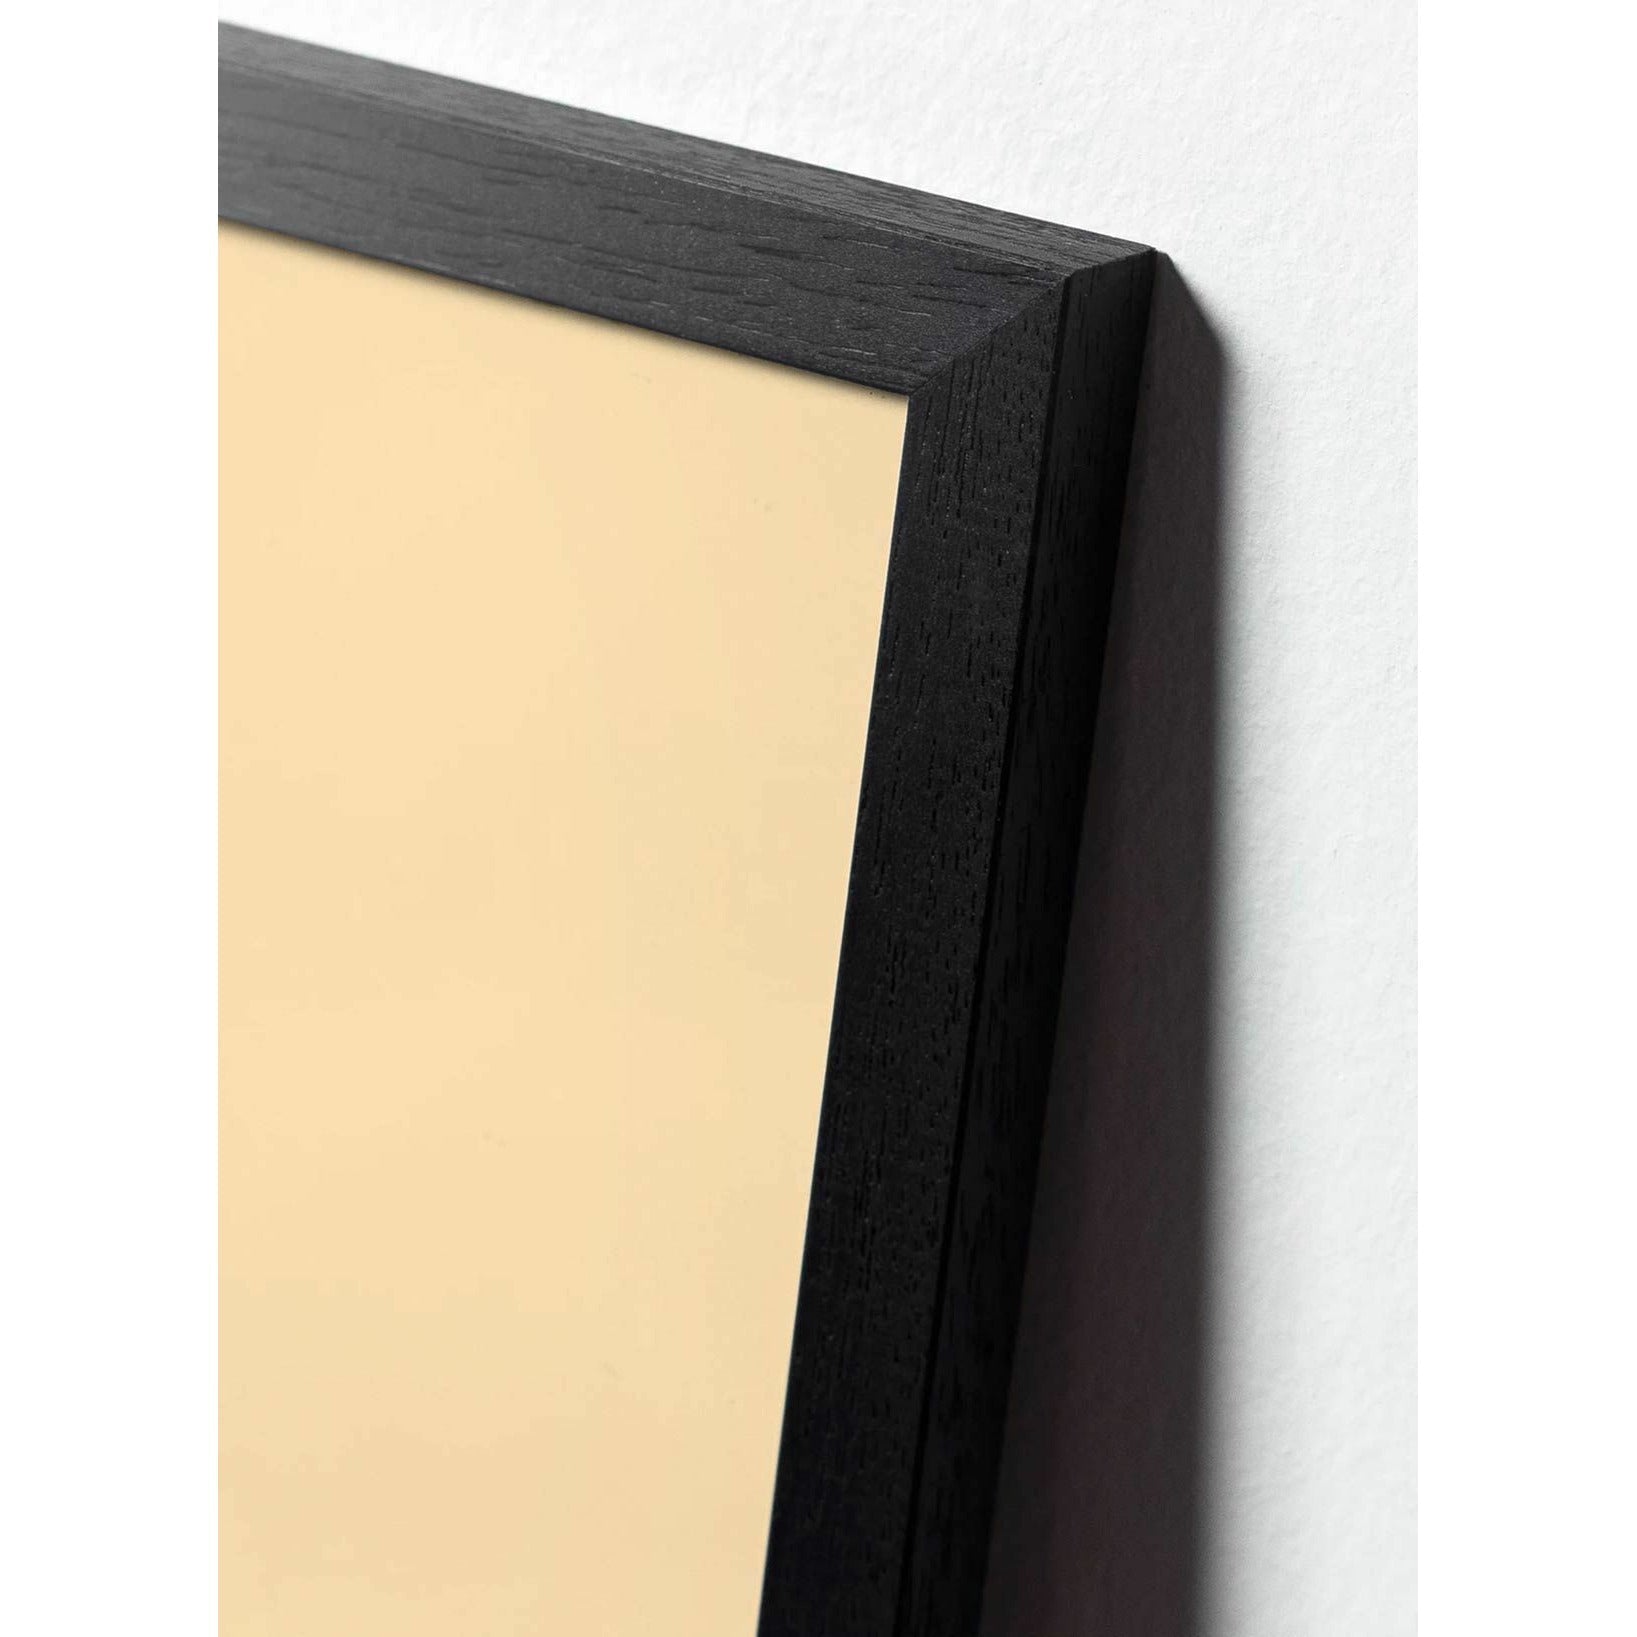 Póster de clip de papel de huevo de creación, marco en madera lacada negra de 30x40 cm, fondo rosa